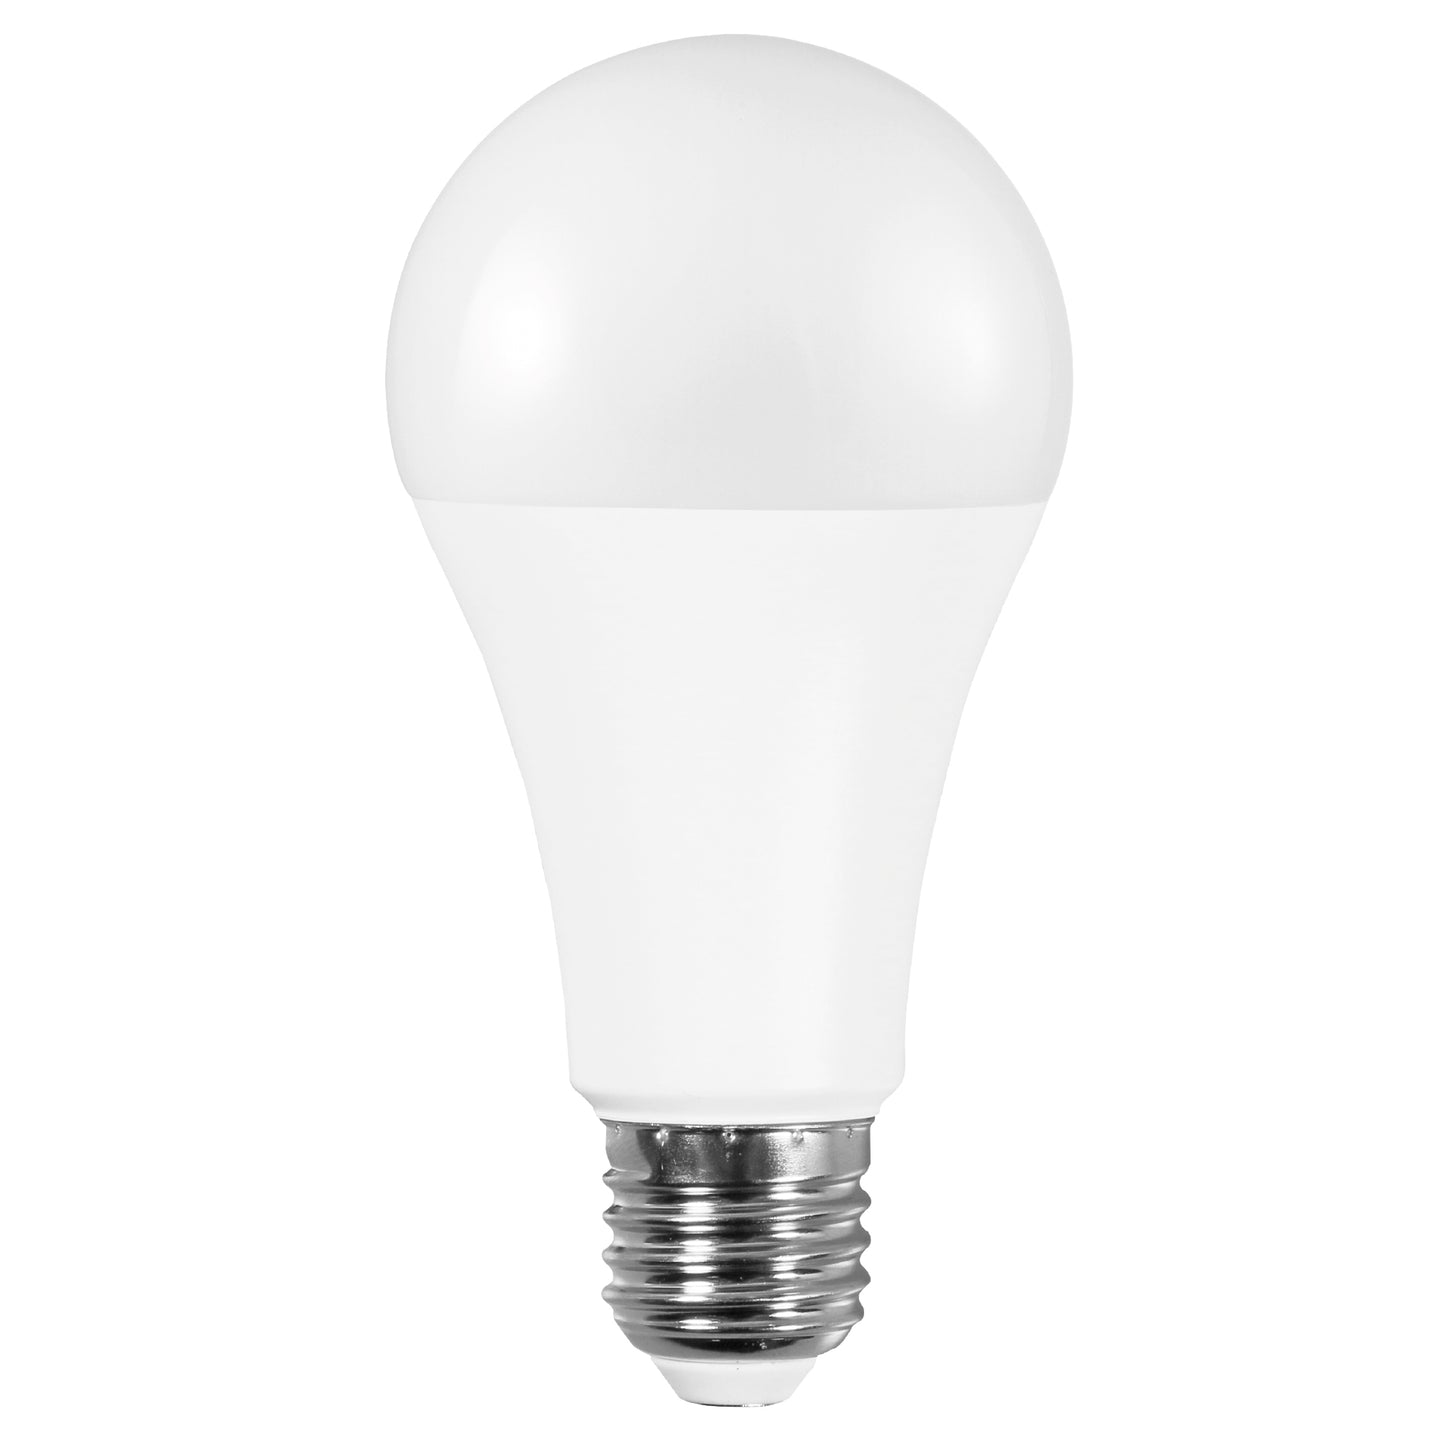 LAMPE LED STANDARD MATEL SMART WIFI E27 14W RVB 